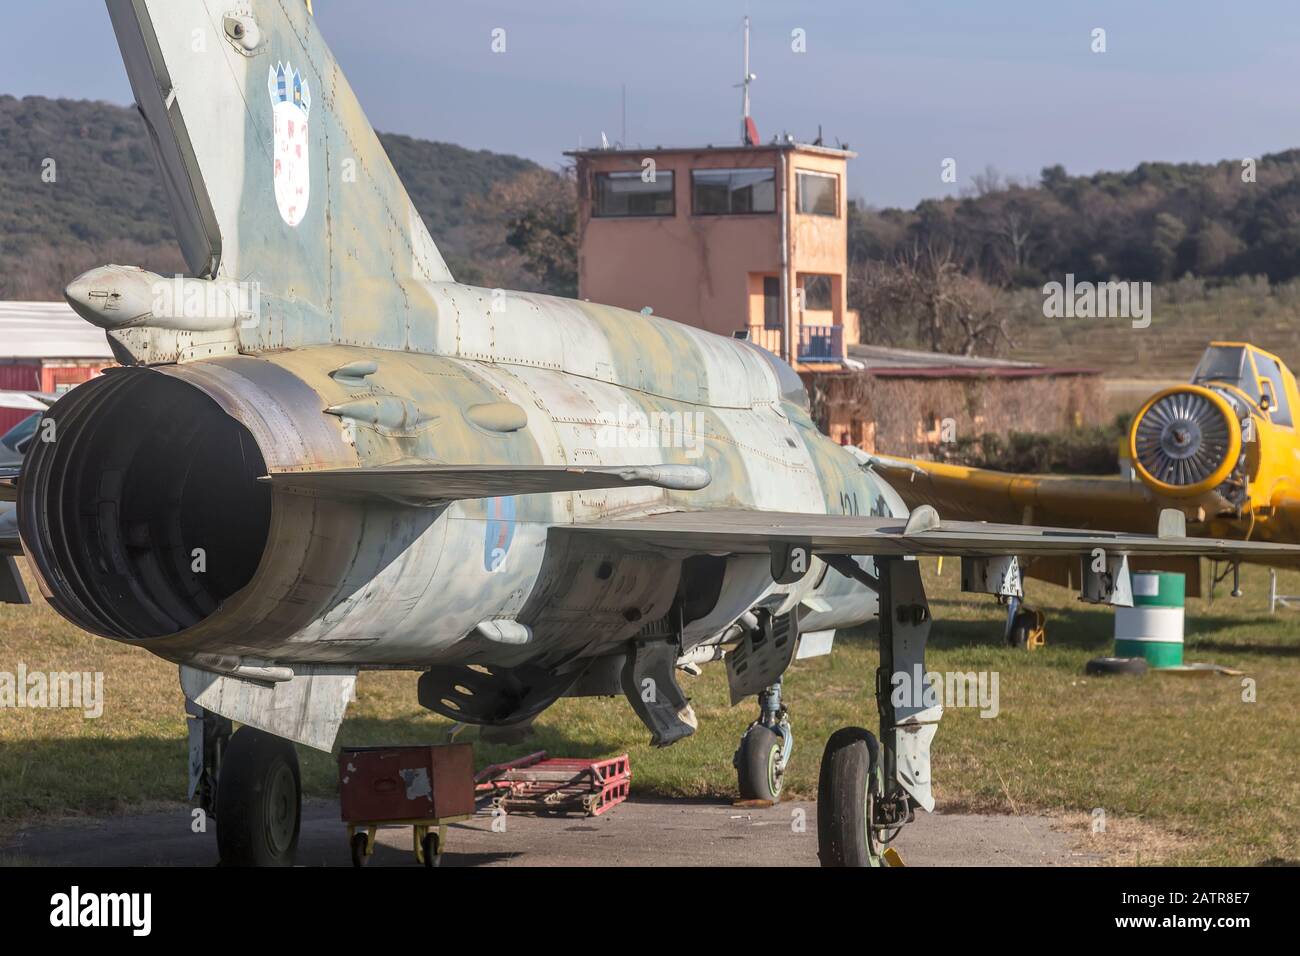 VRSAR, CROATIA - JANUARY 29, 2020:  Old supersonic jet fighter MiG-21, Fishbed, exhibited at the Aeropark in Vrsar, Istria, Croatia Stock Photo